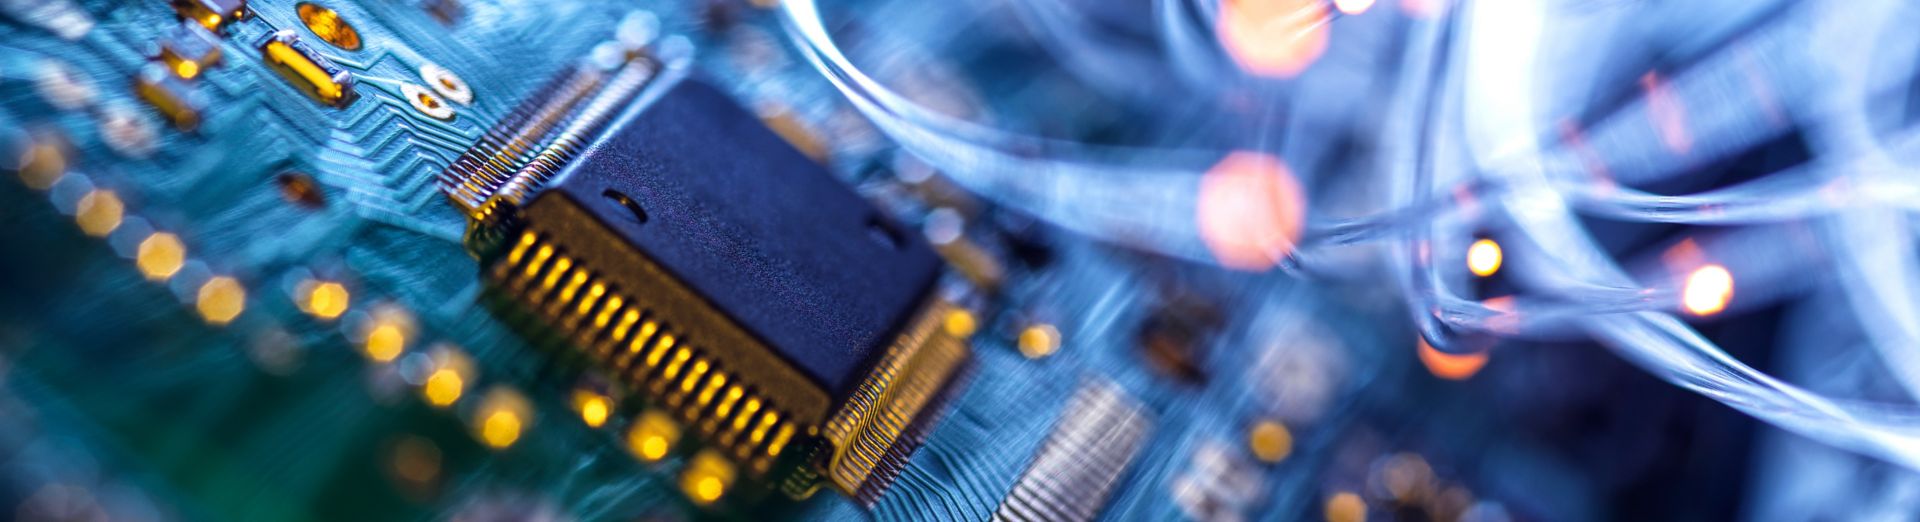 Fiber optics carrying ERP data through electronic circuit boards